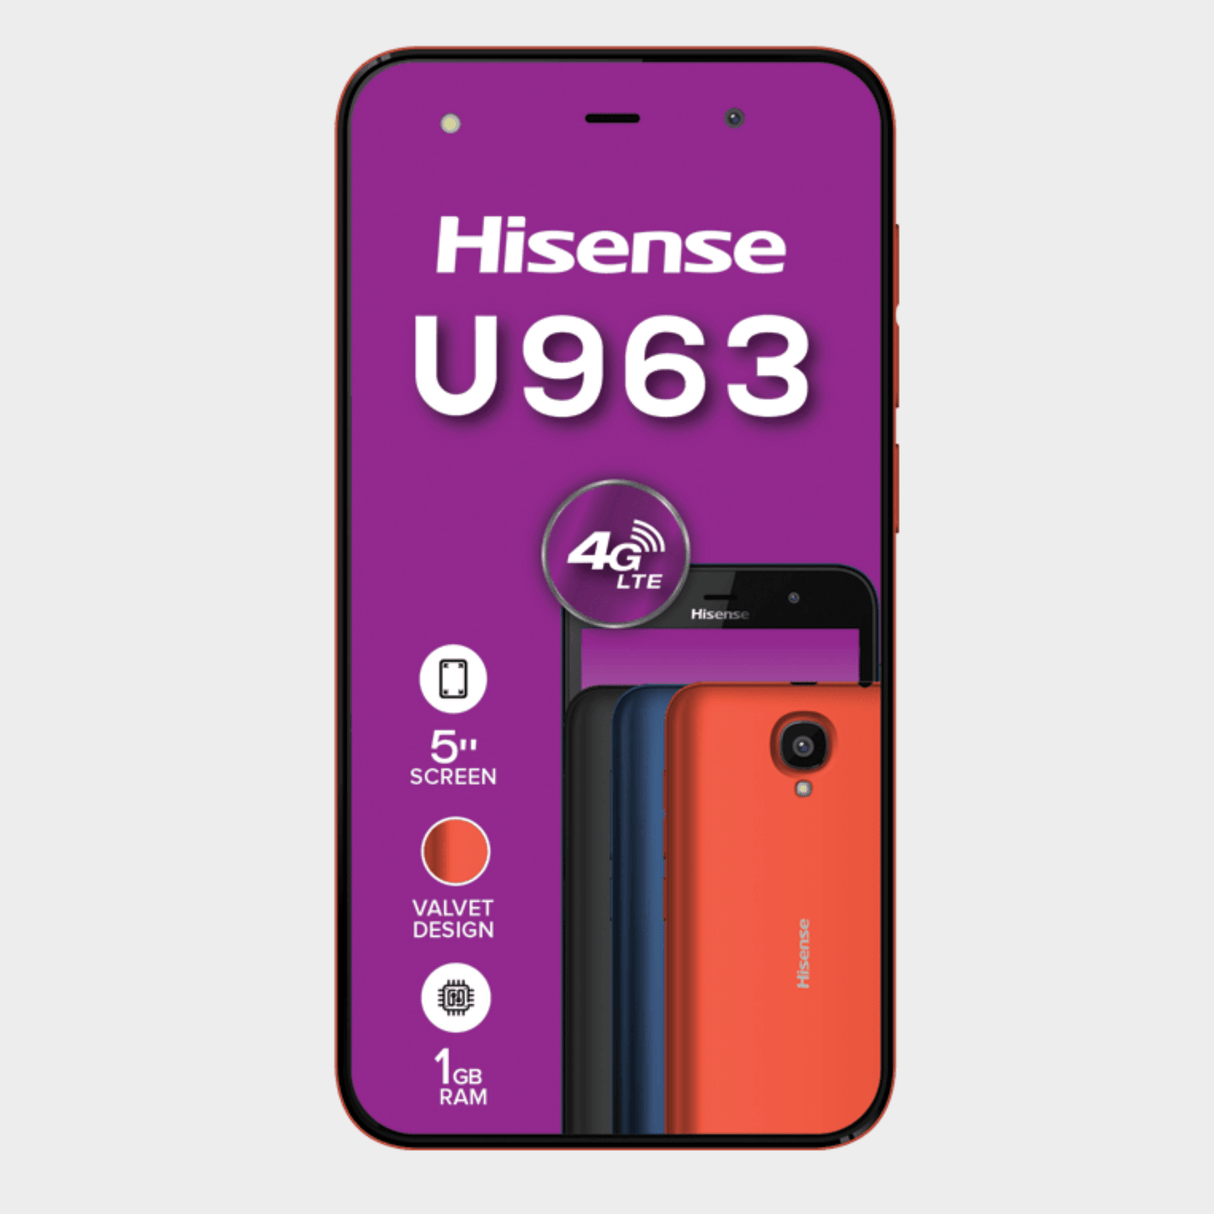 Hisense Infinity 5" Screen Smart Phone, velvet design, 4G/LTE Connectivity and long lasting battery-U963